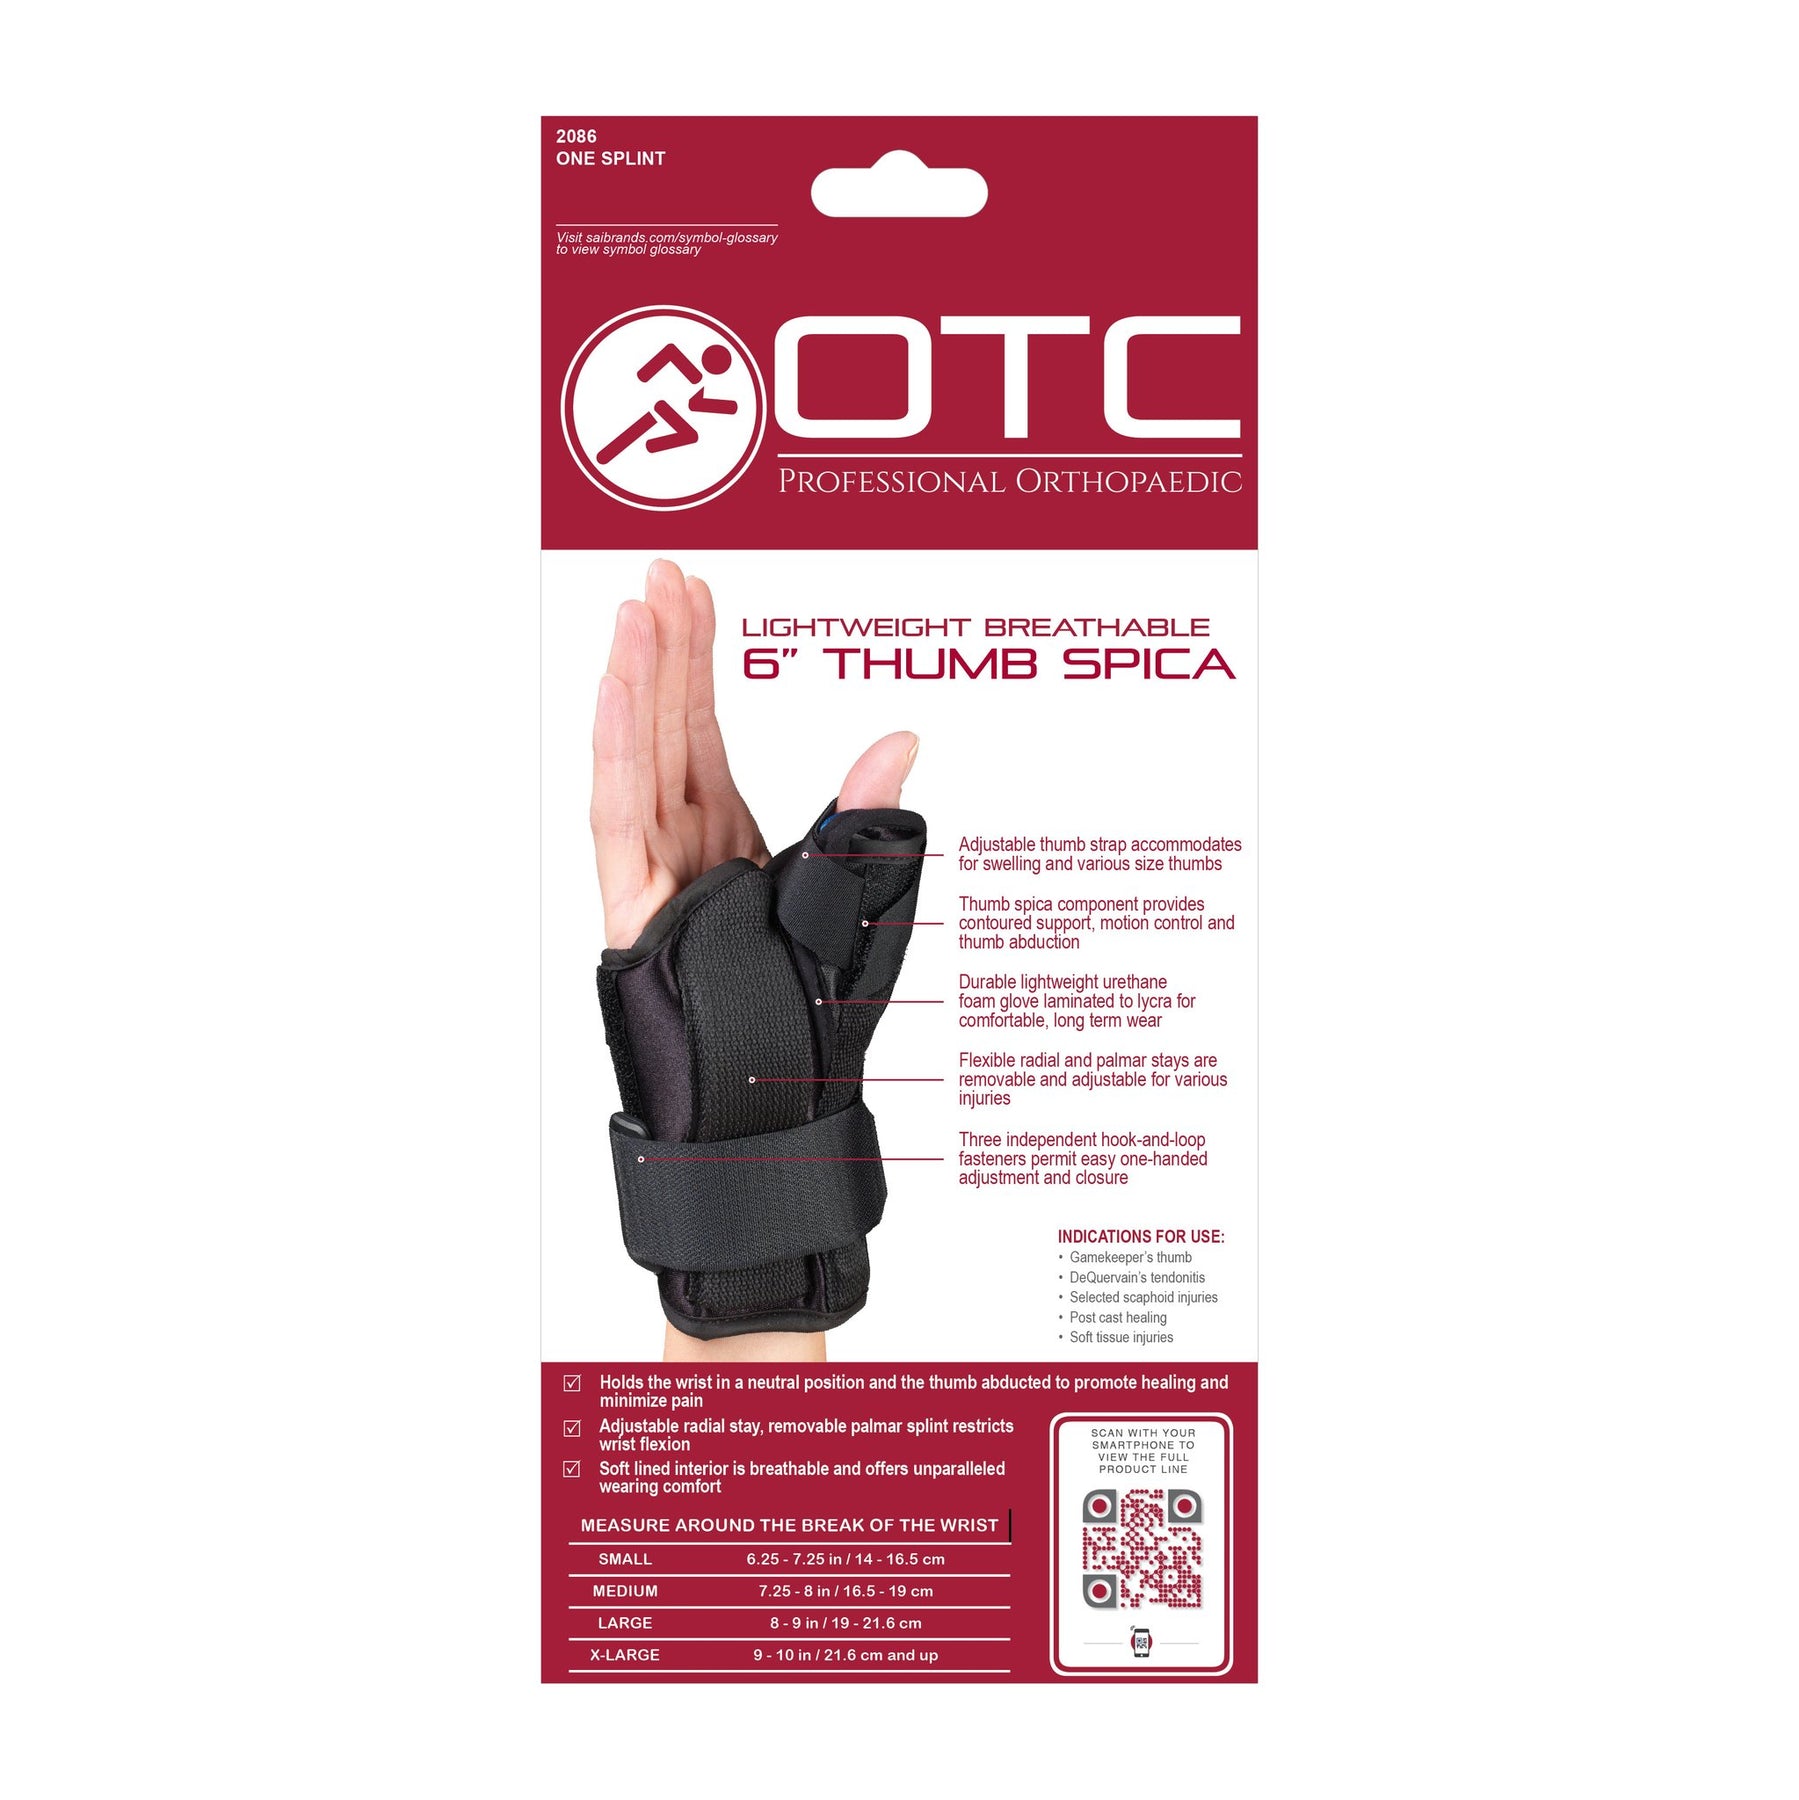 Steve Gloves Latex L | Grip Gloves for Easy Donning of Compression Socks Easy, L